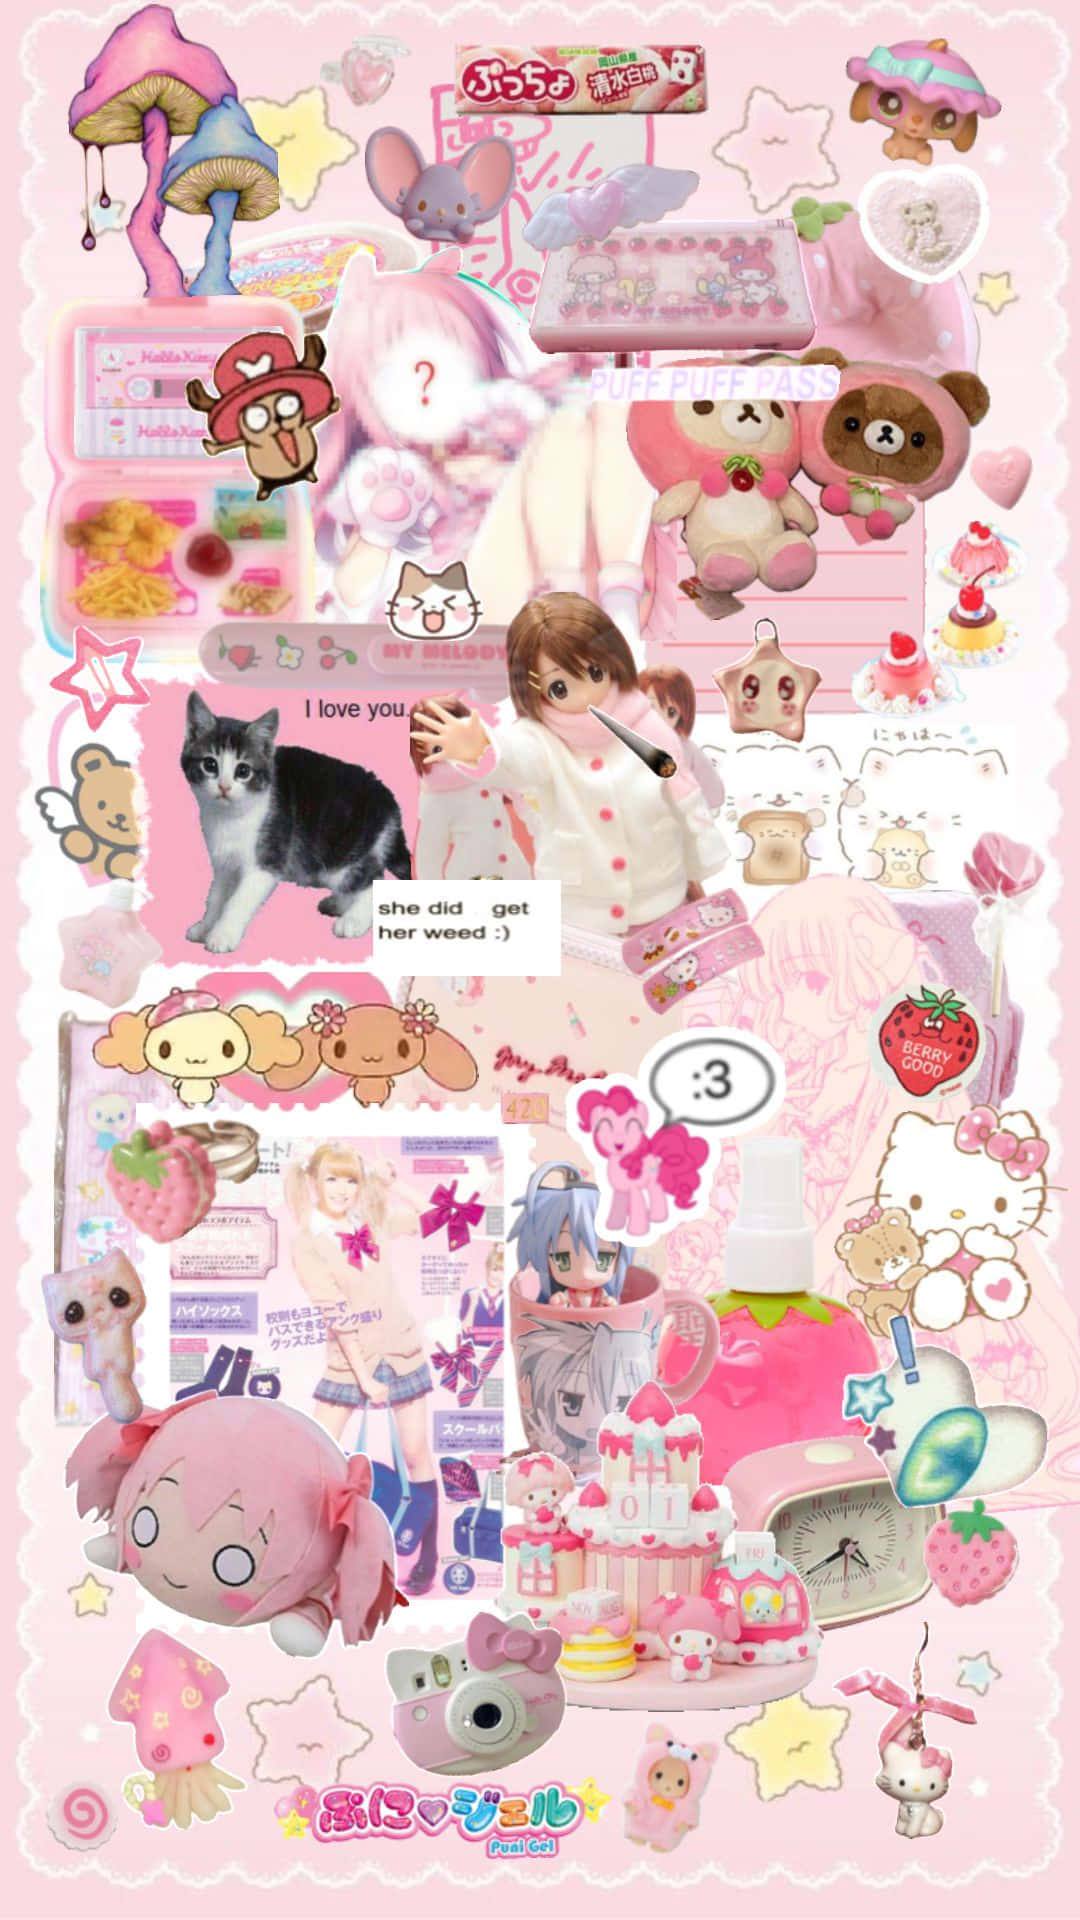 Kawaii Collage Pink Aesthetic Wallpaper